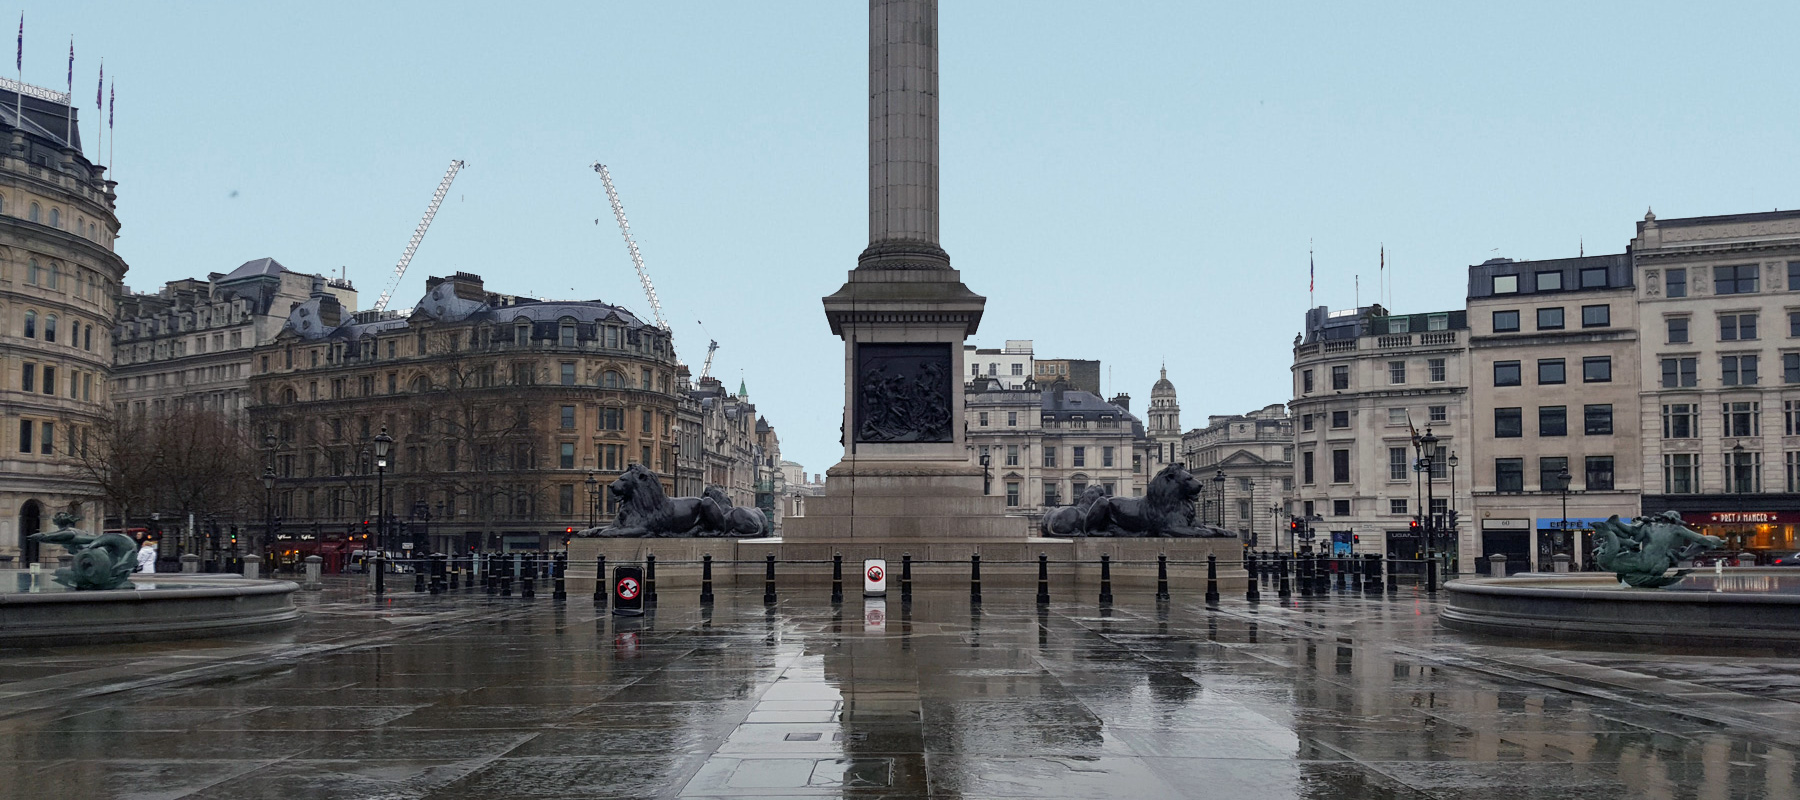 Header image for Trafalgar Square